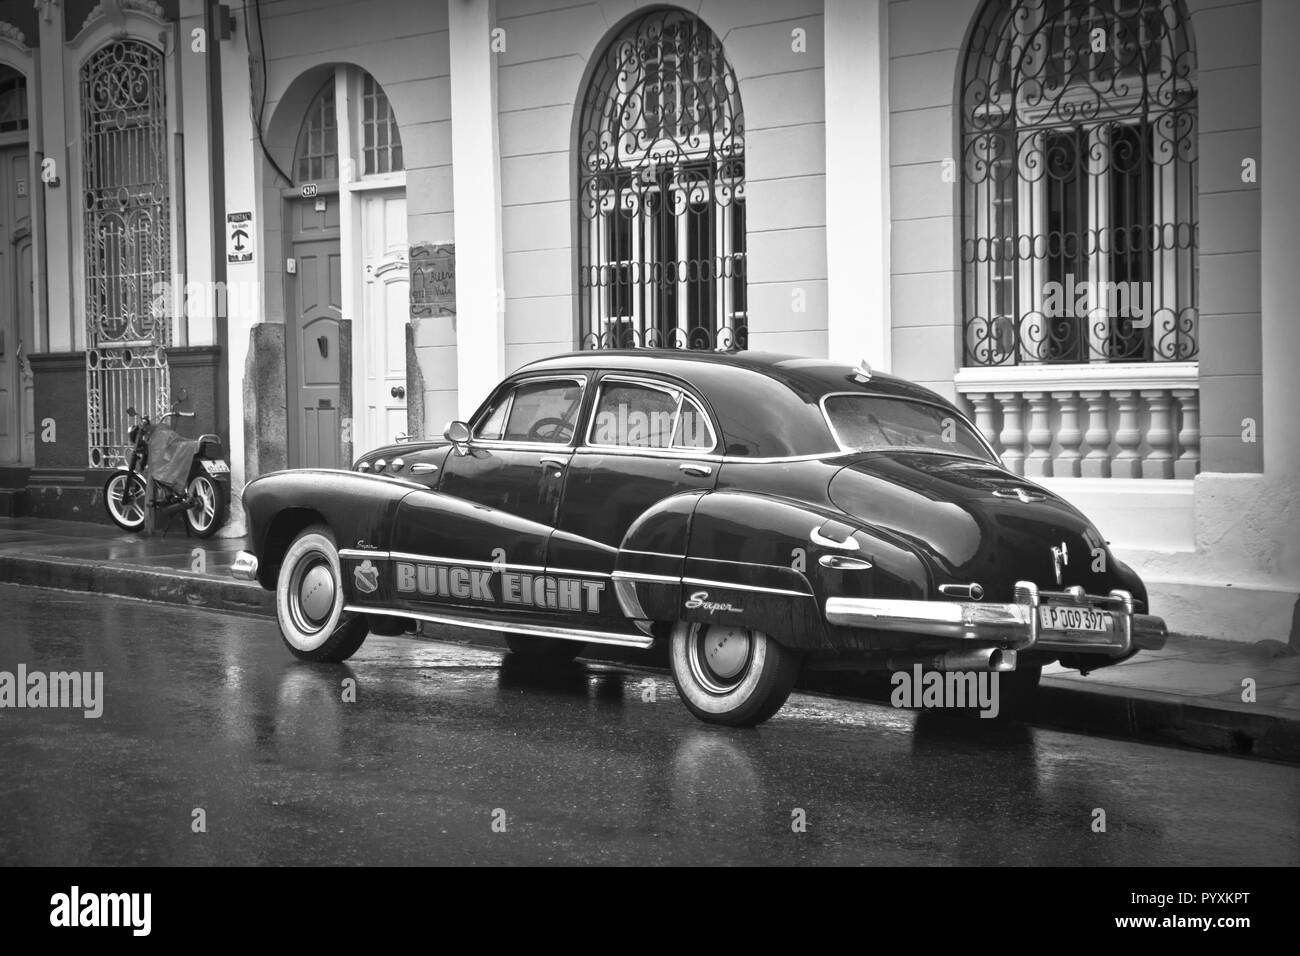 Cuba, Havana, La Habana, Caribbean, 'Pearl of the Antilles' old cars, streets and beautiful beaches. Stock Photo